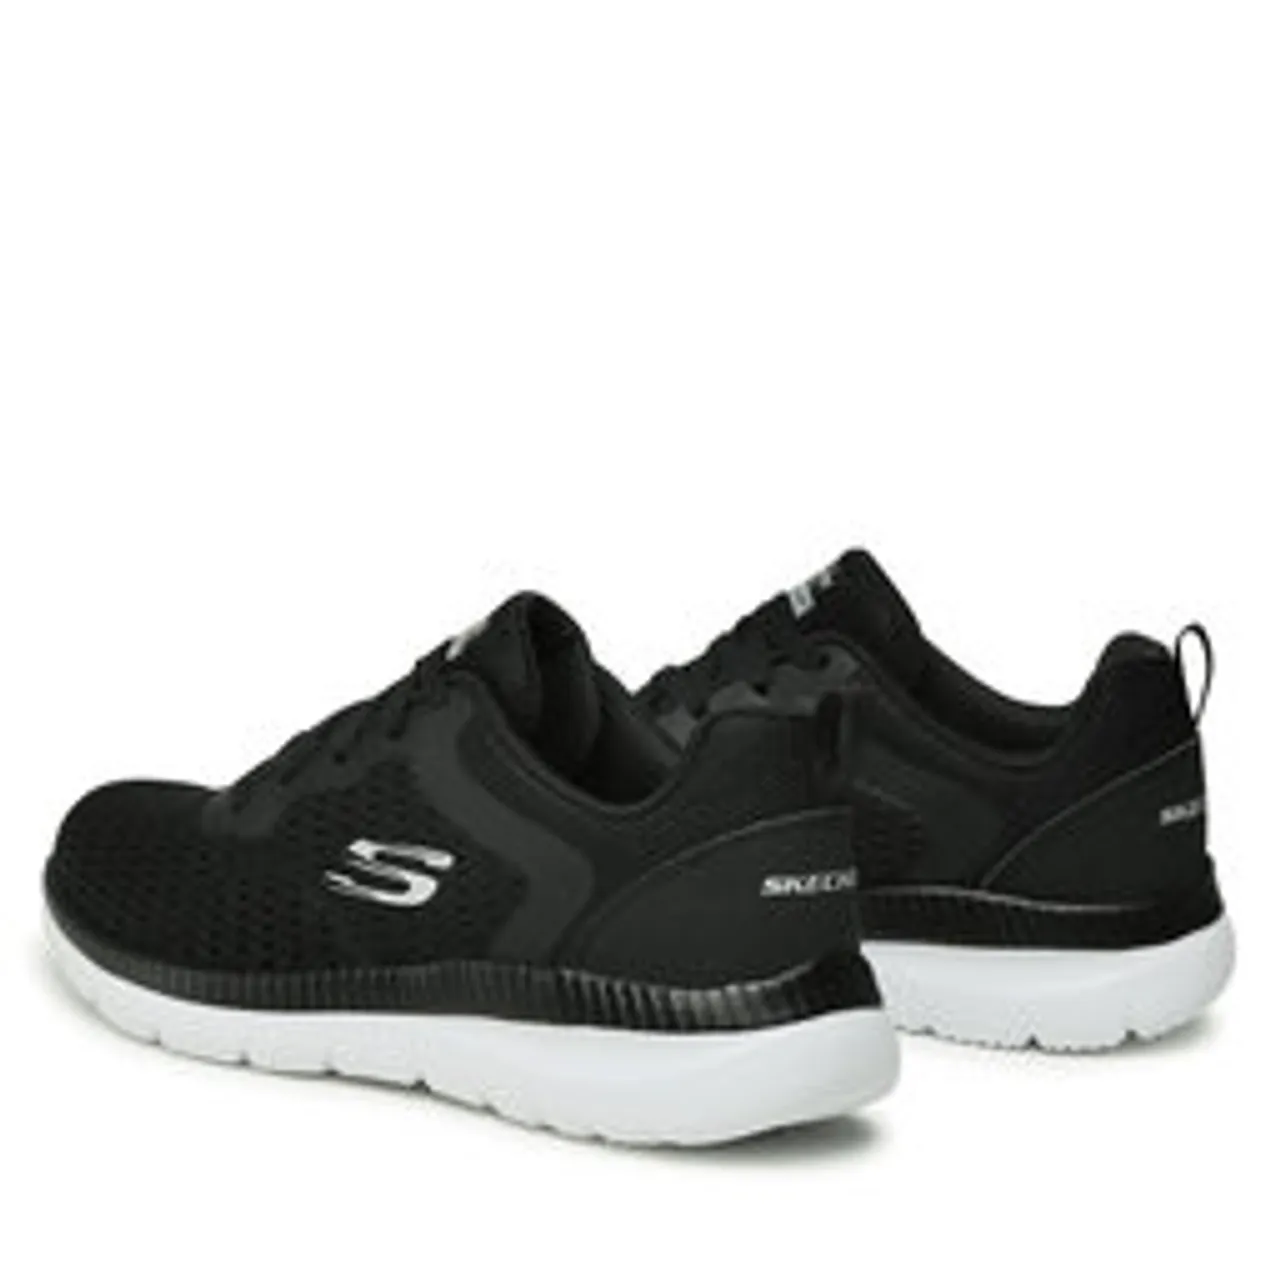 Schuhe Skechers Quick Path 12607/BKW Black/White